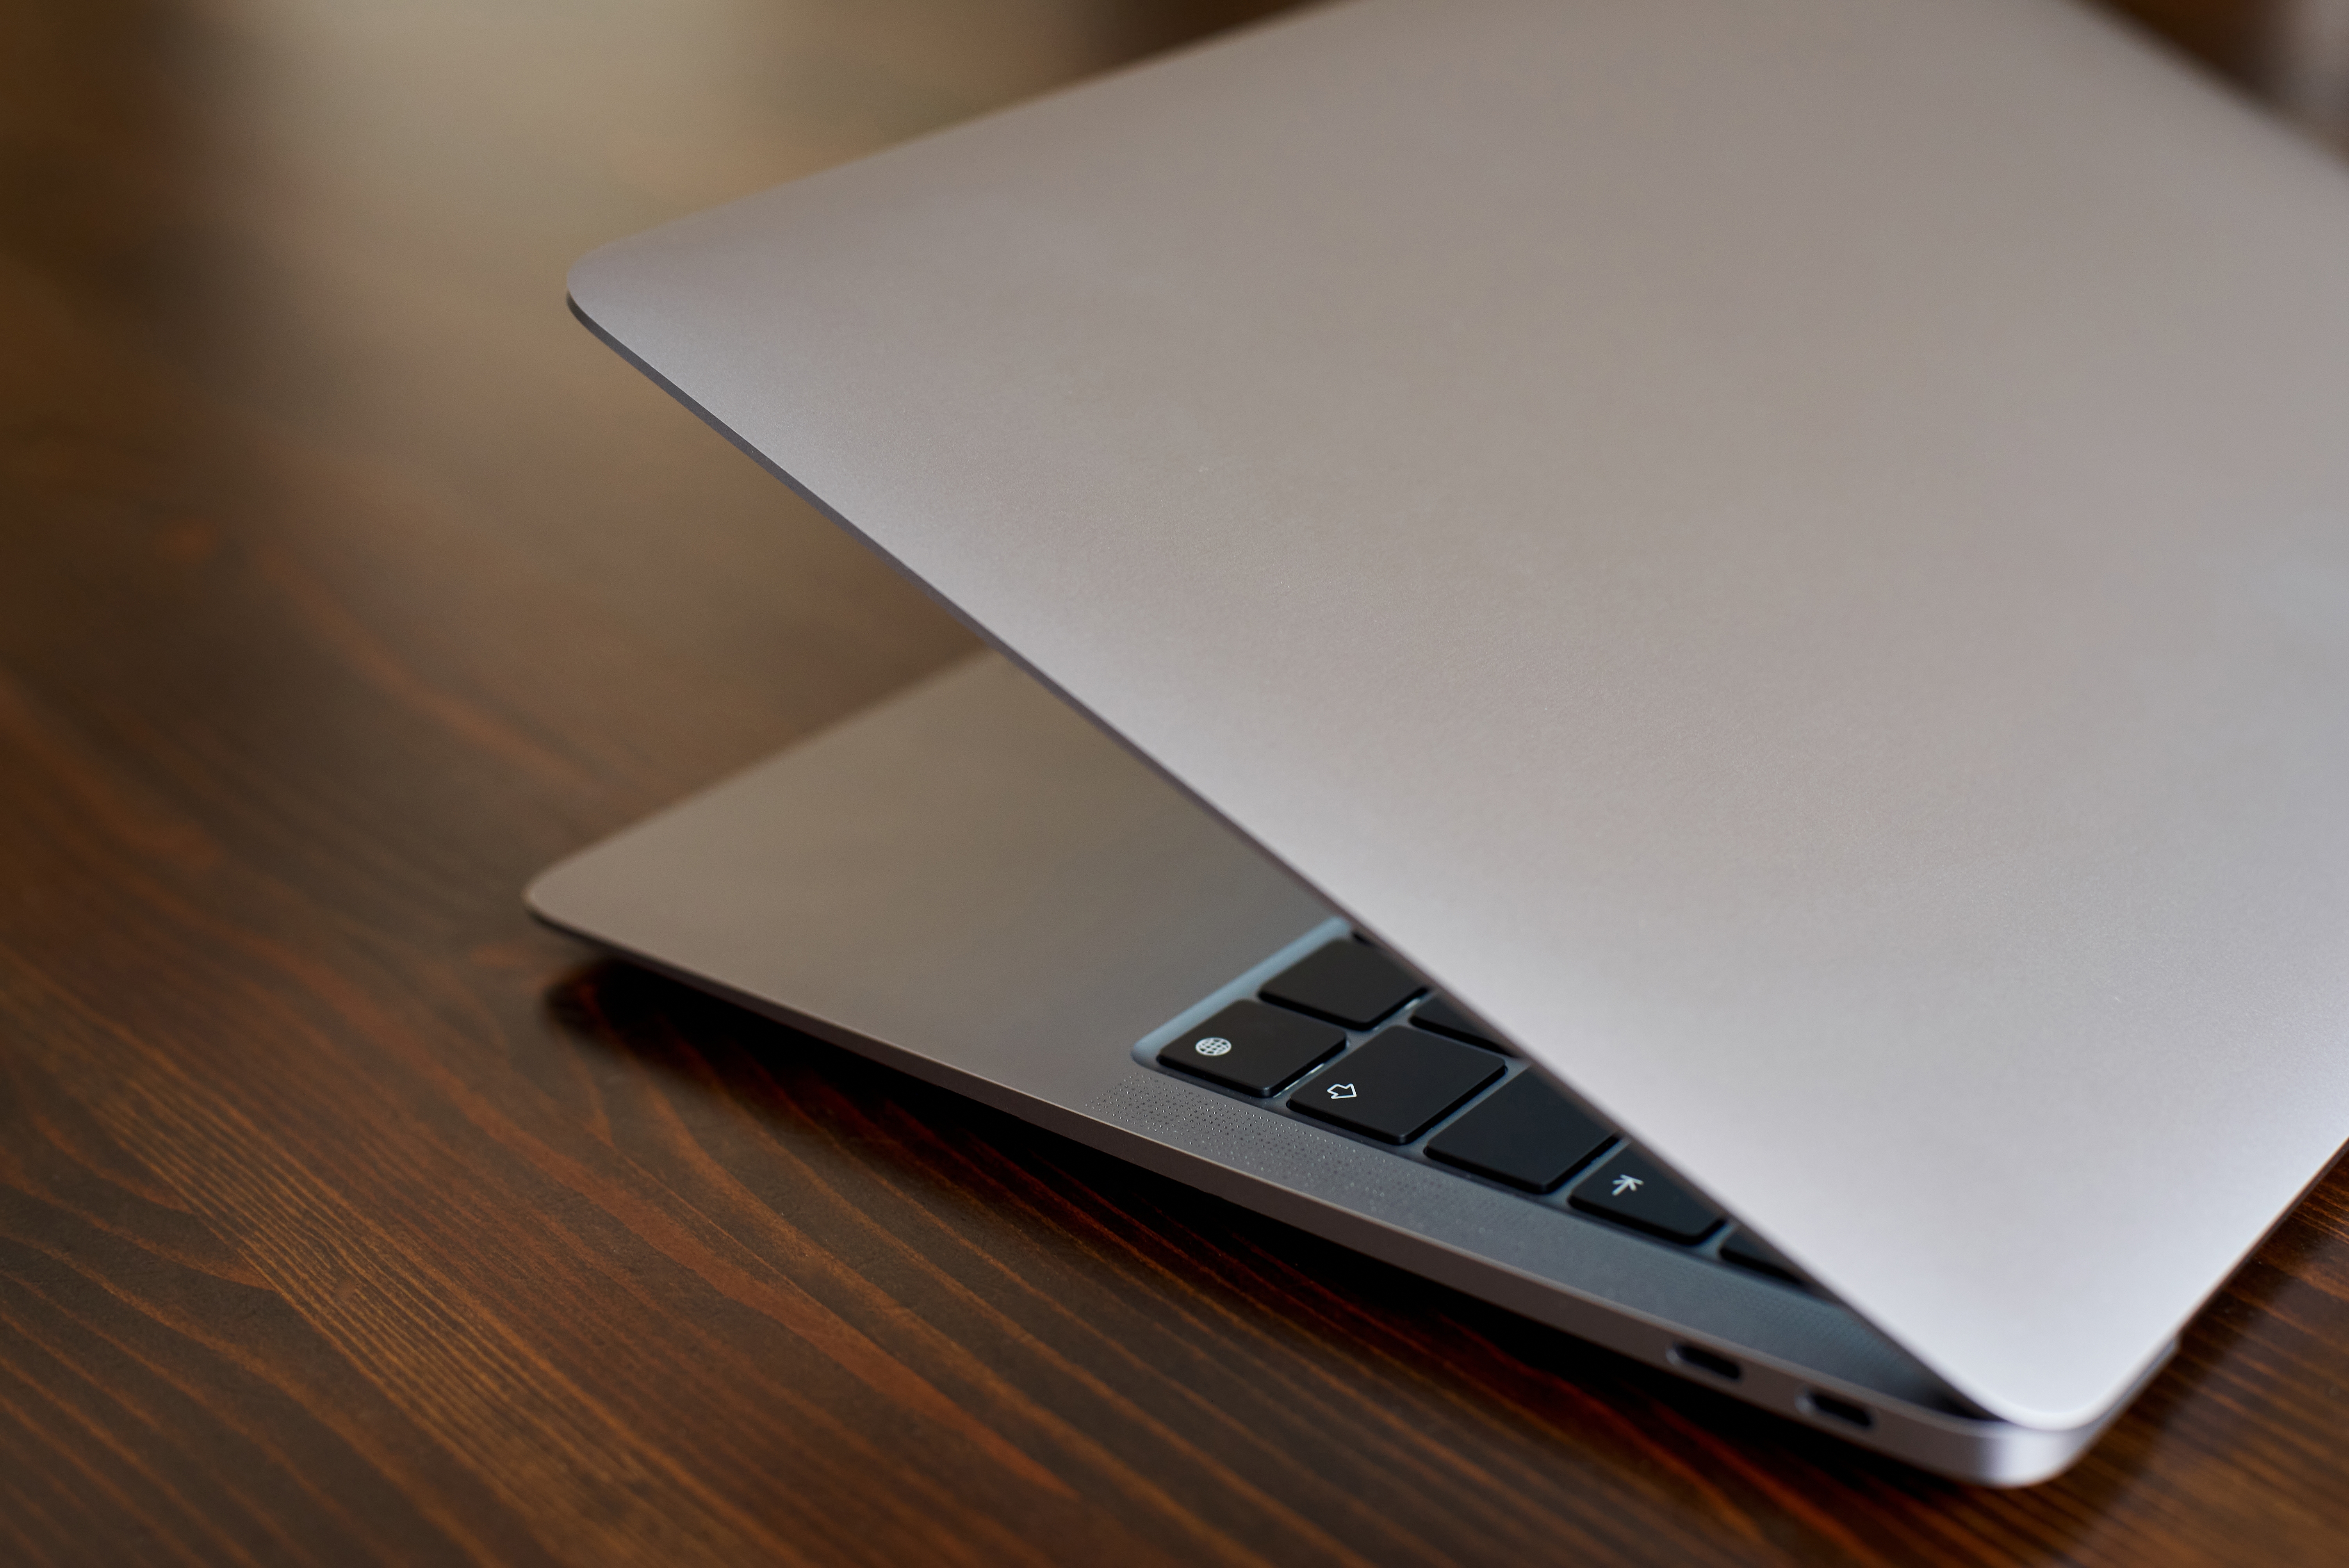 A half-closed laptop | Source: Shutterstock